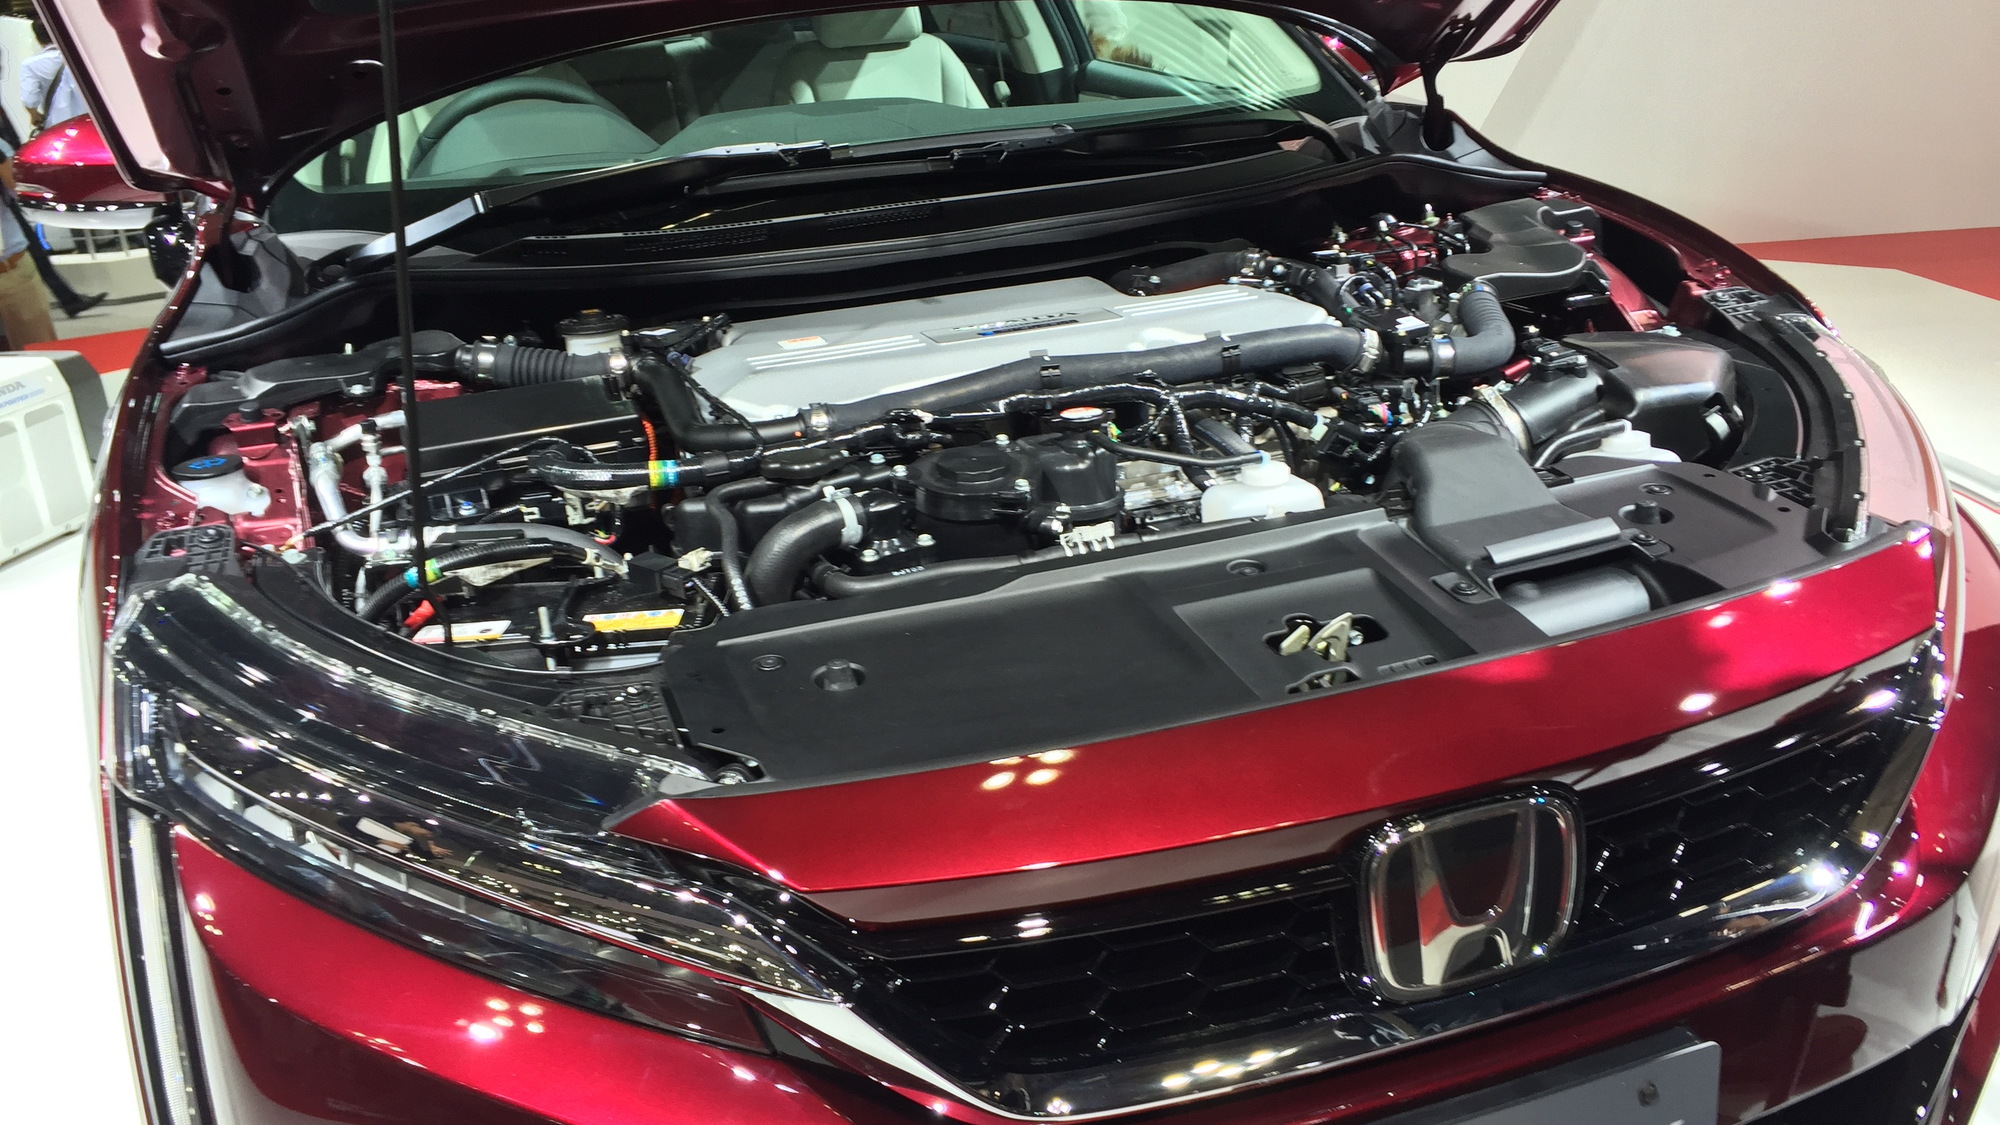 Honda Clarity Fuel Cell, 2015 Tokyo Motor Show